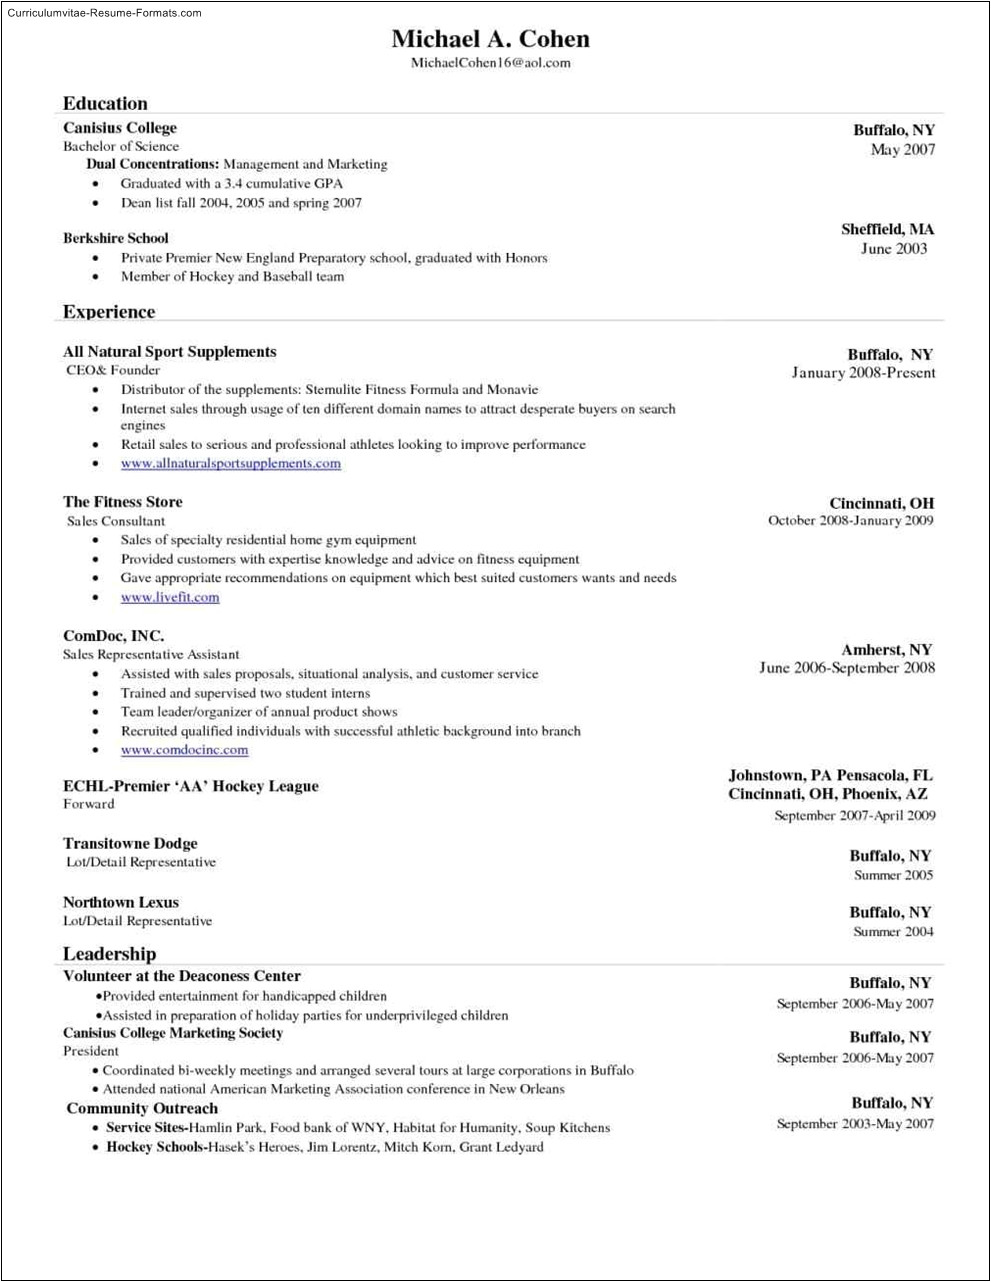 Resume format Word 2010 Microsoft Word 2010 Resume Template Download Free